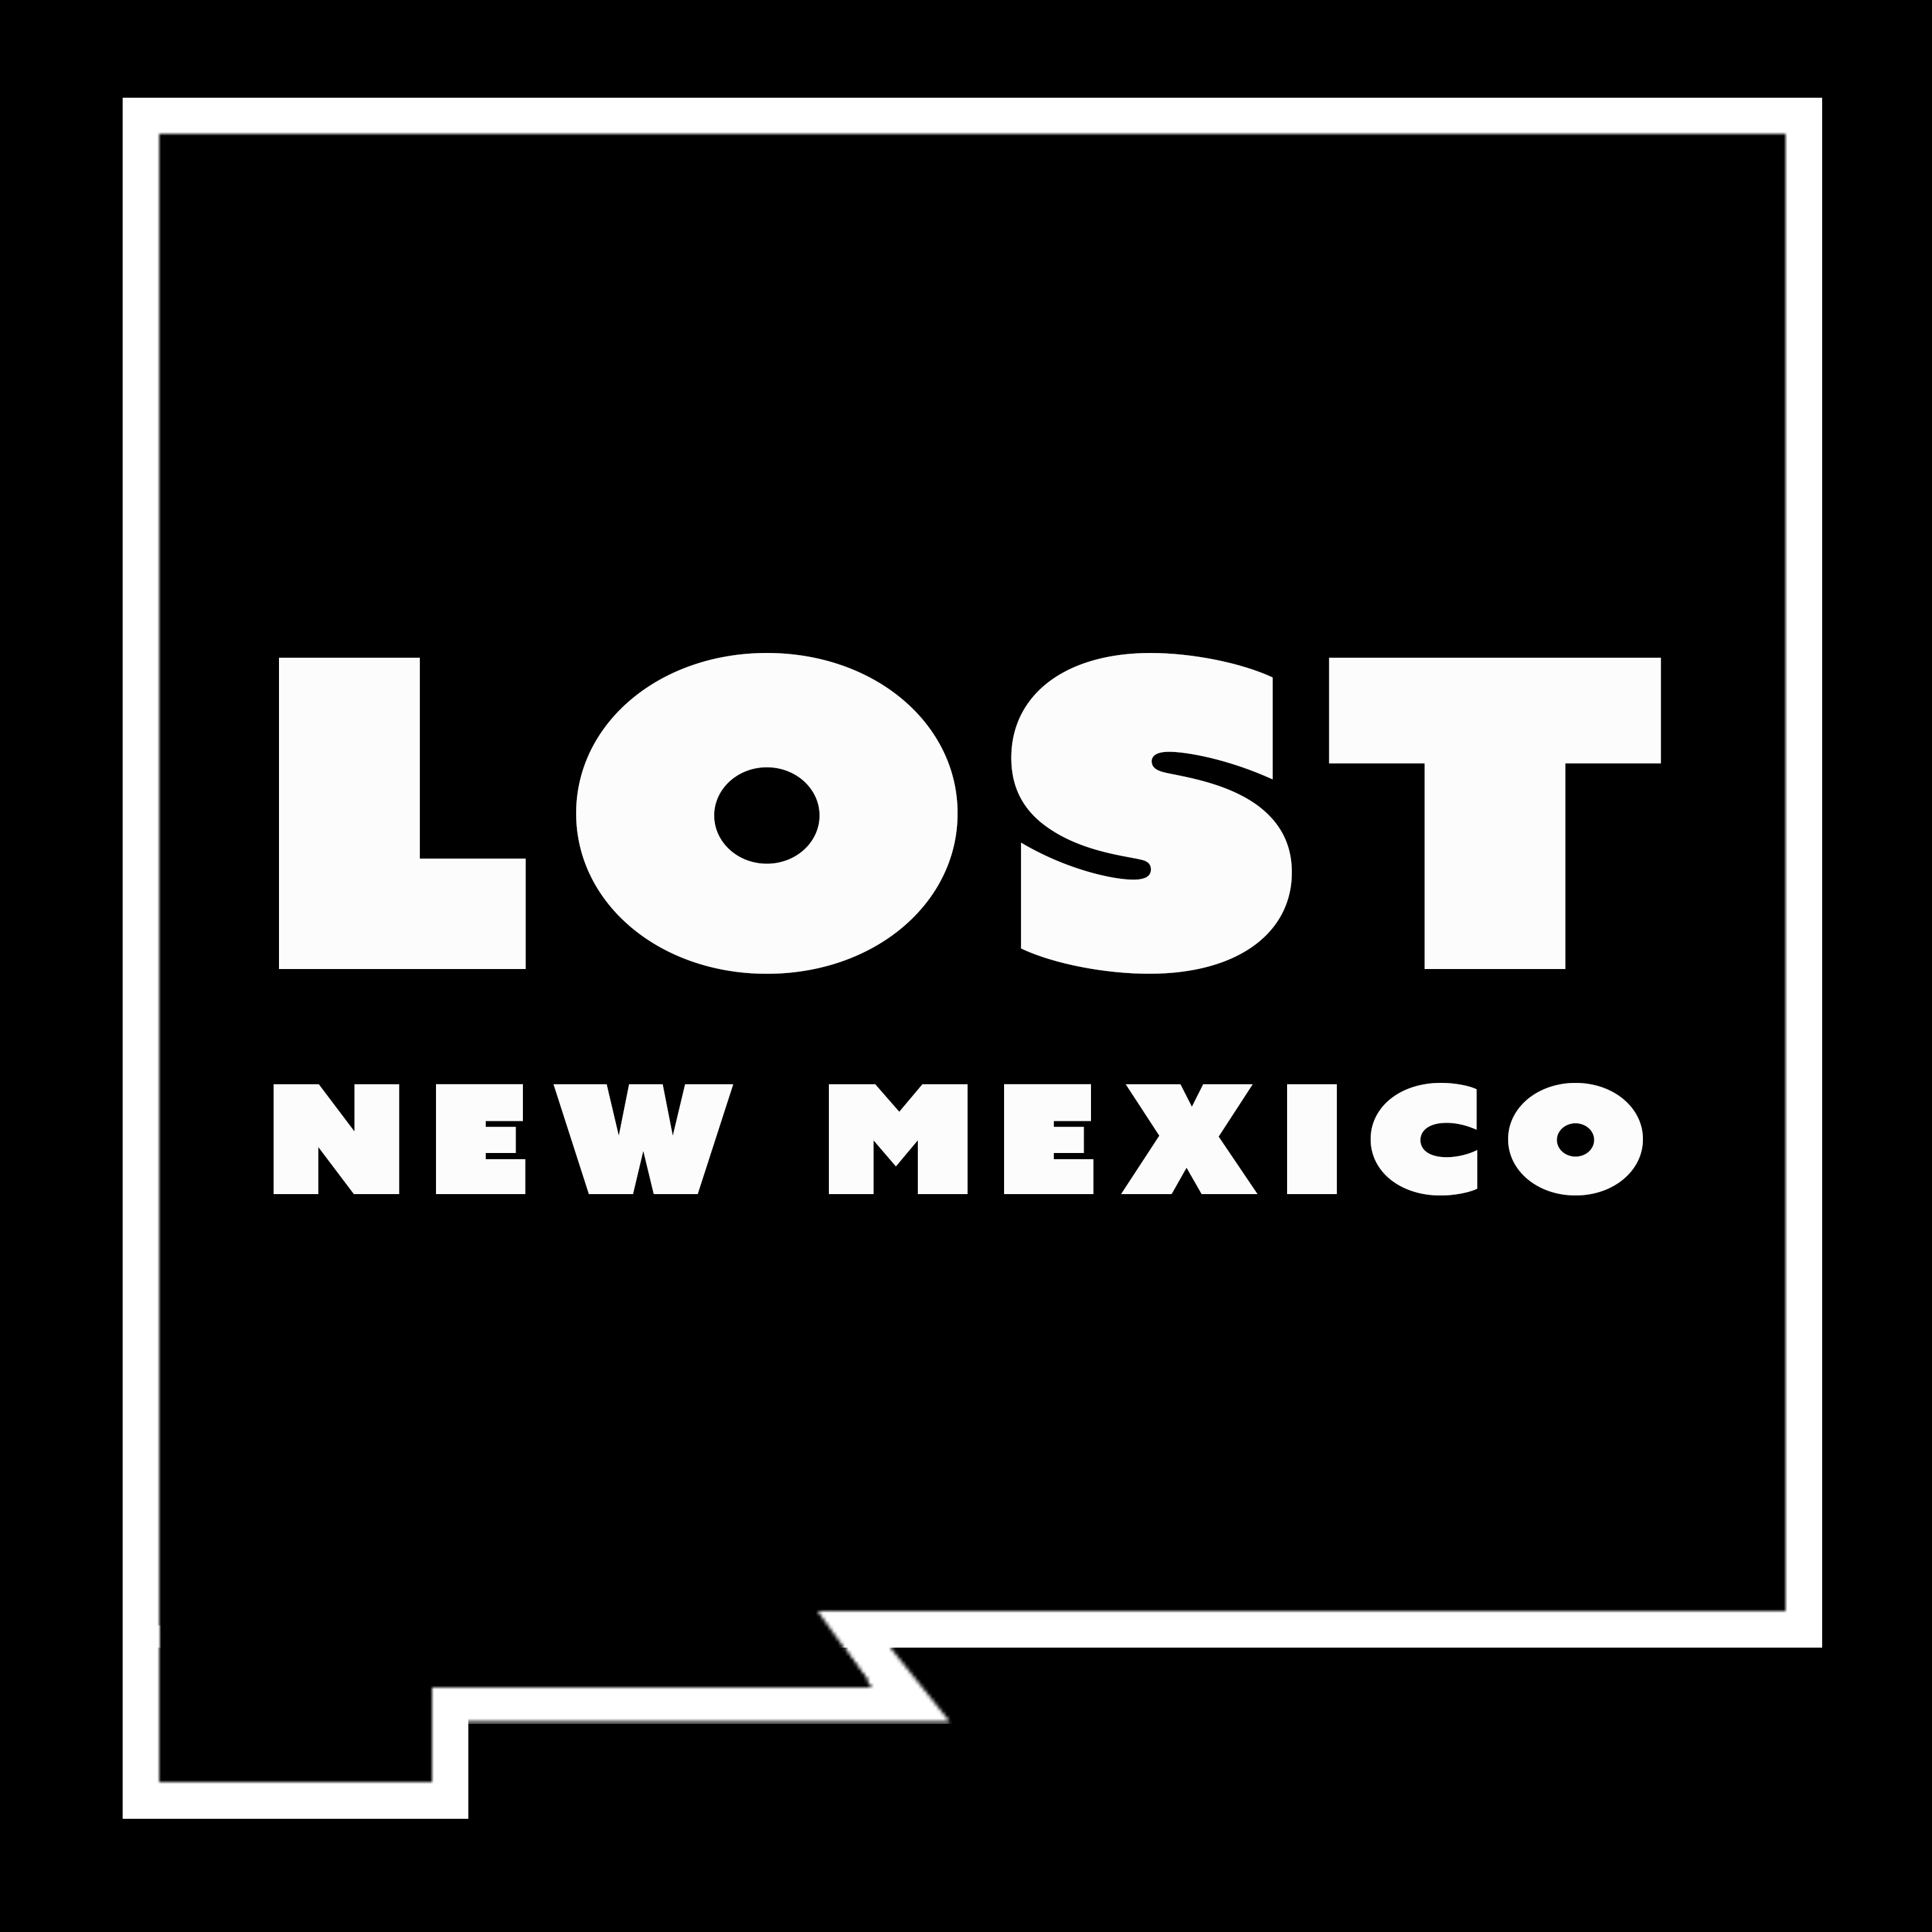 Lost New Mexico